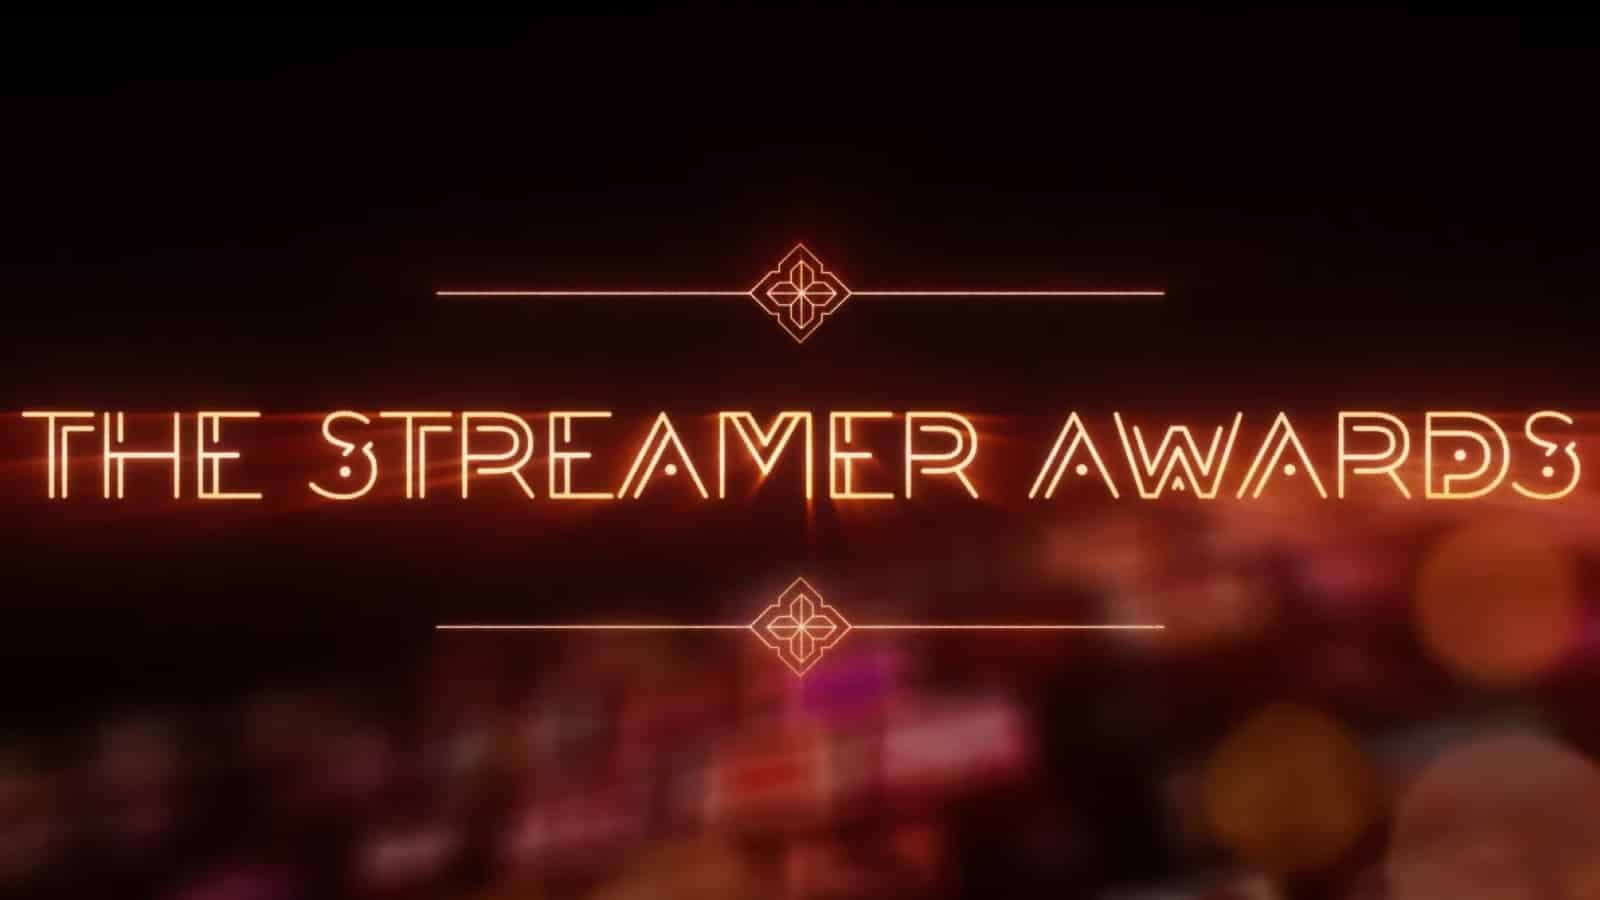 The Streamer Awards.